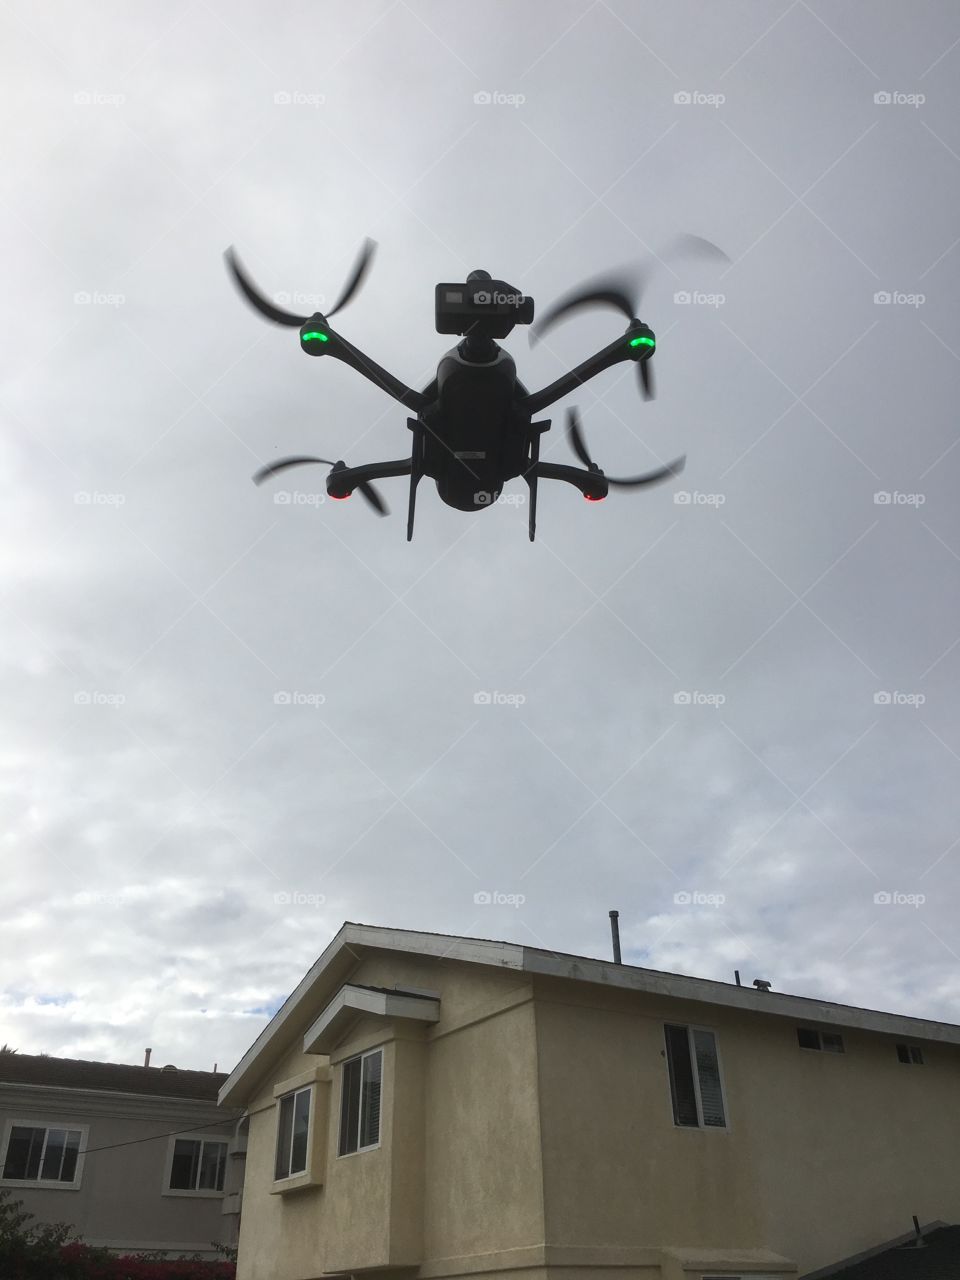 Drone menace 